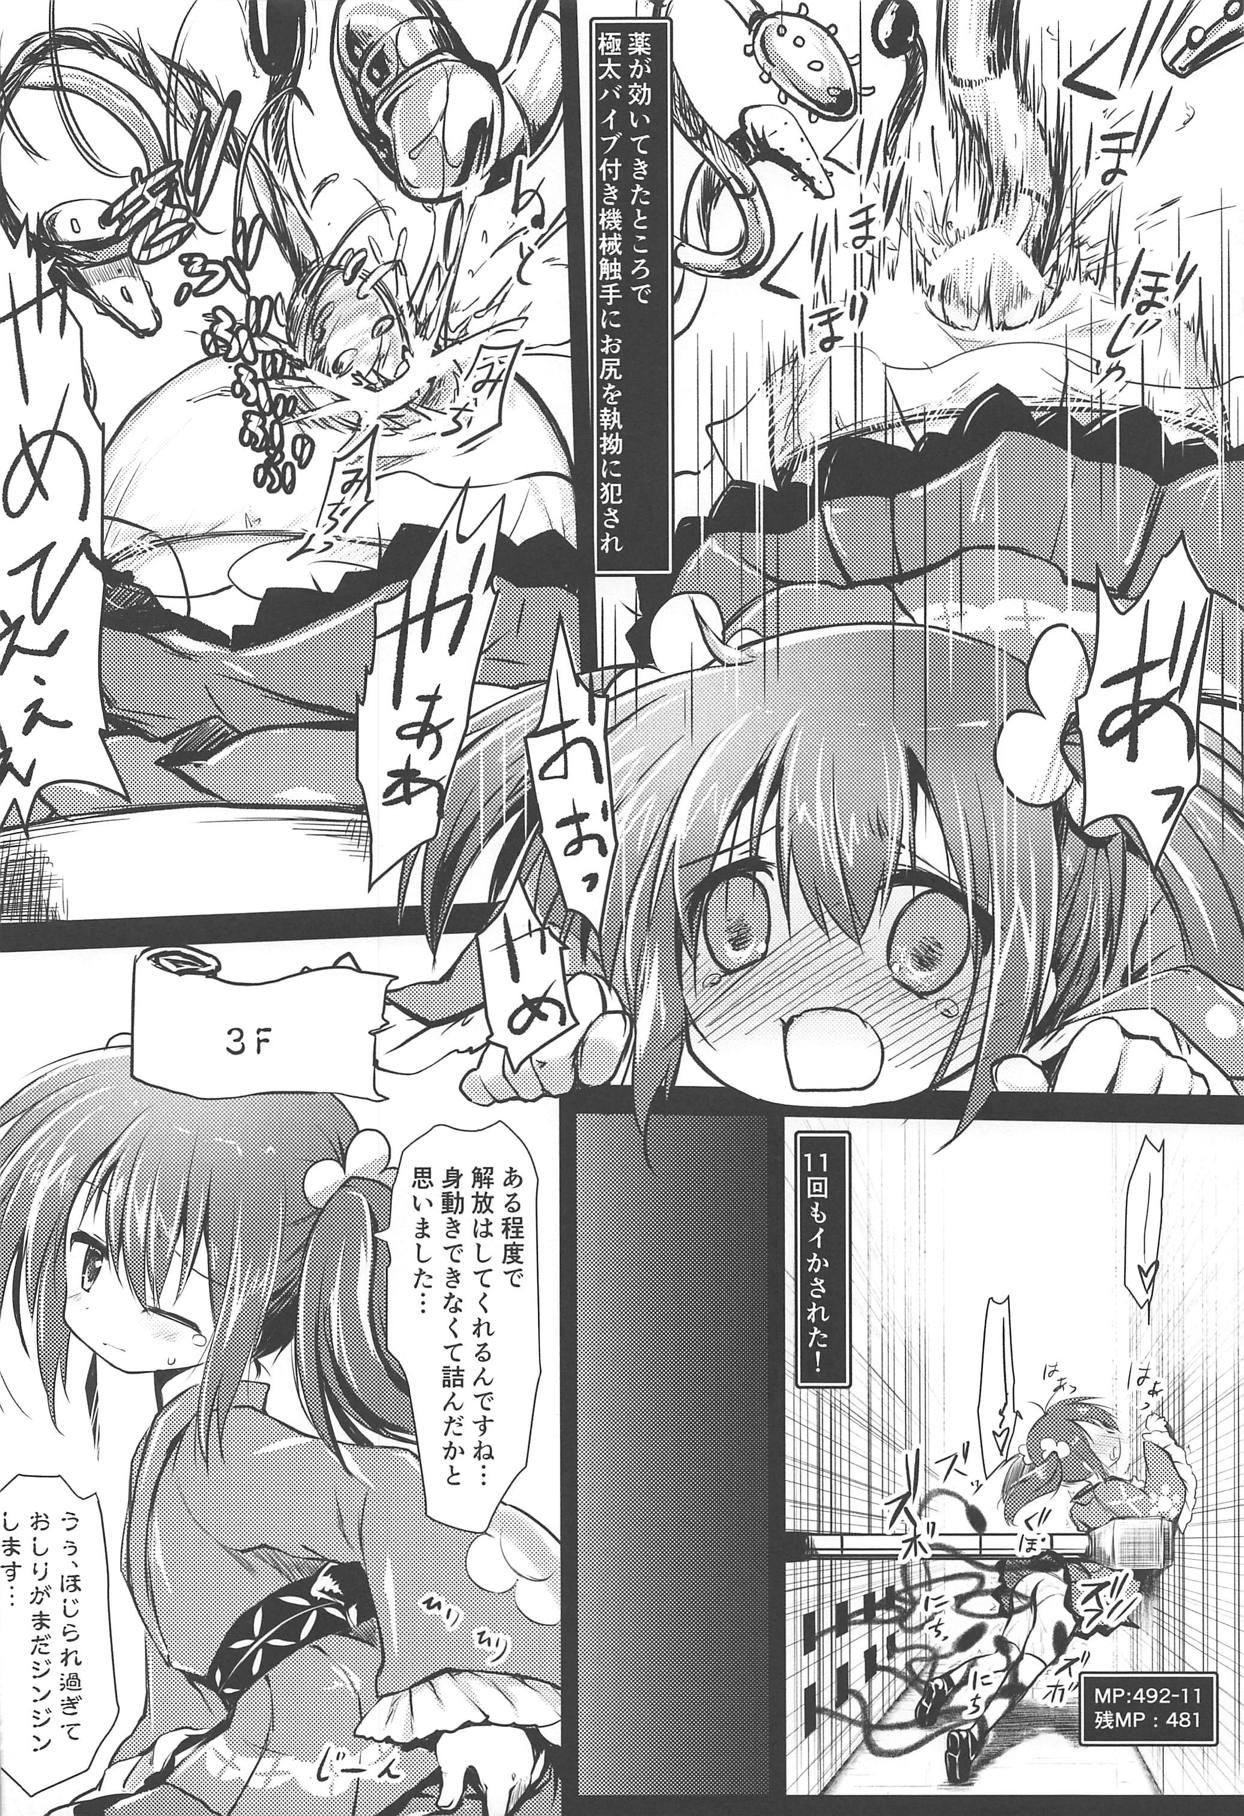 Asslicking Nishikigi VS Ero Trap D - Flower knight girl Amazing - Page 9